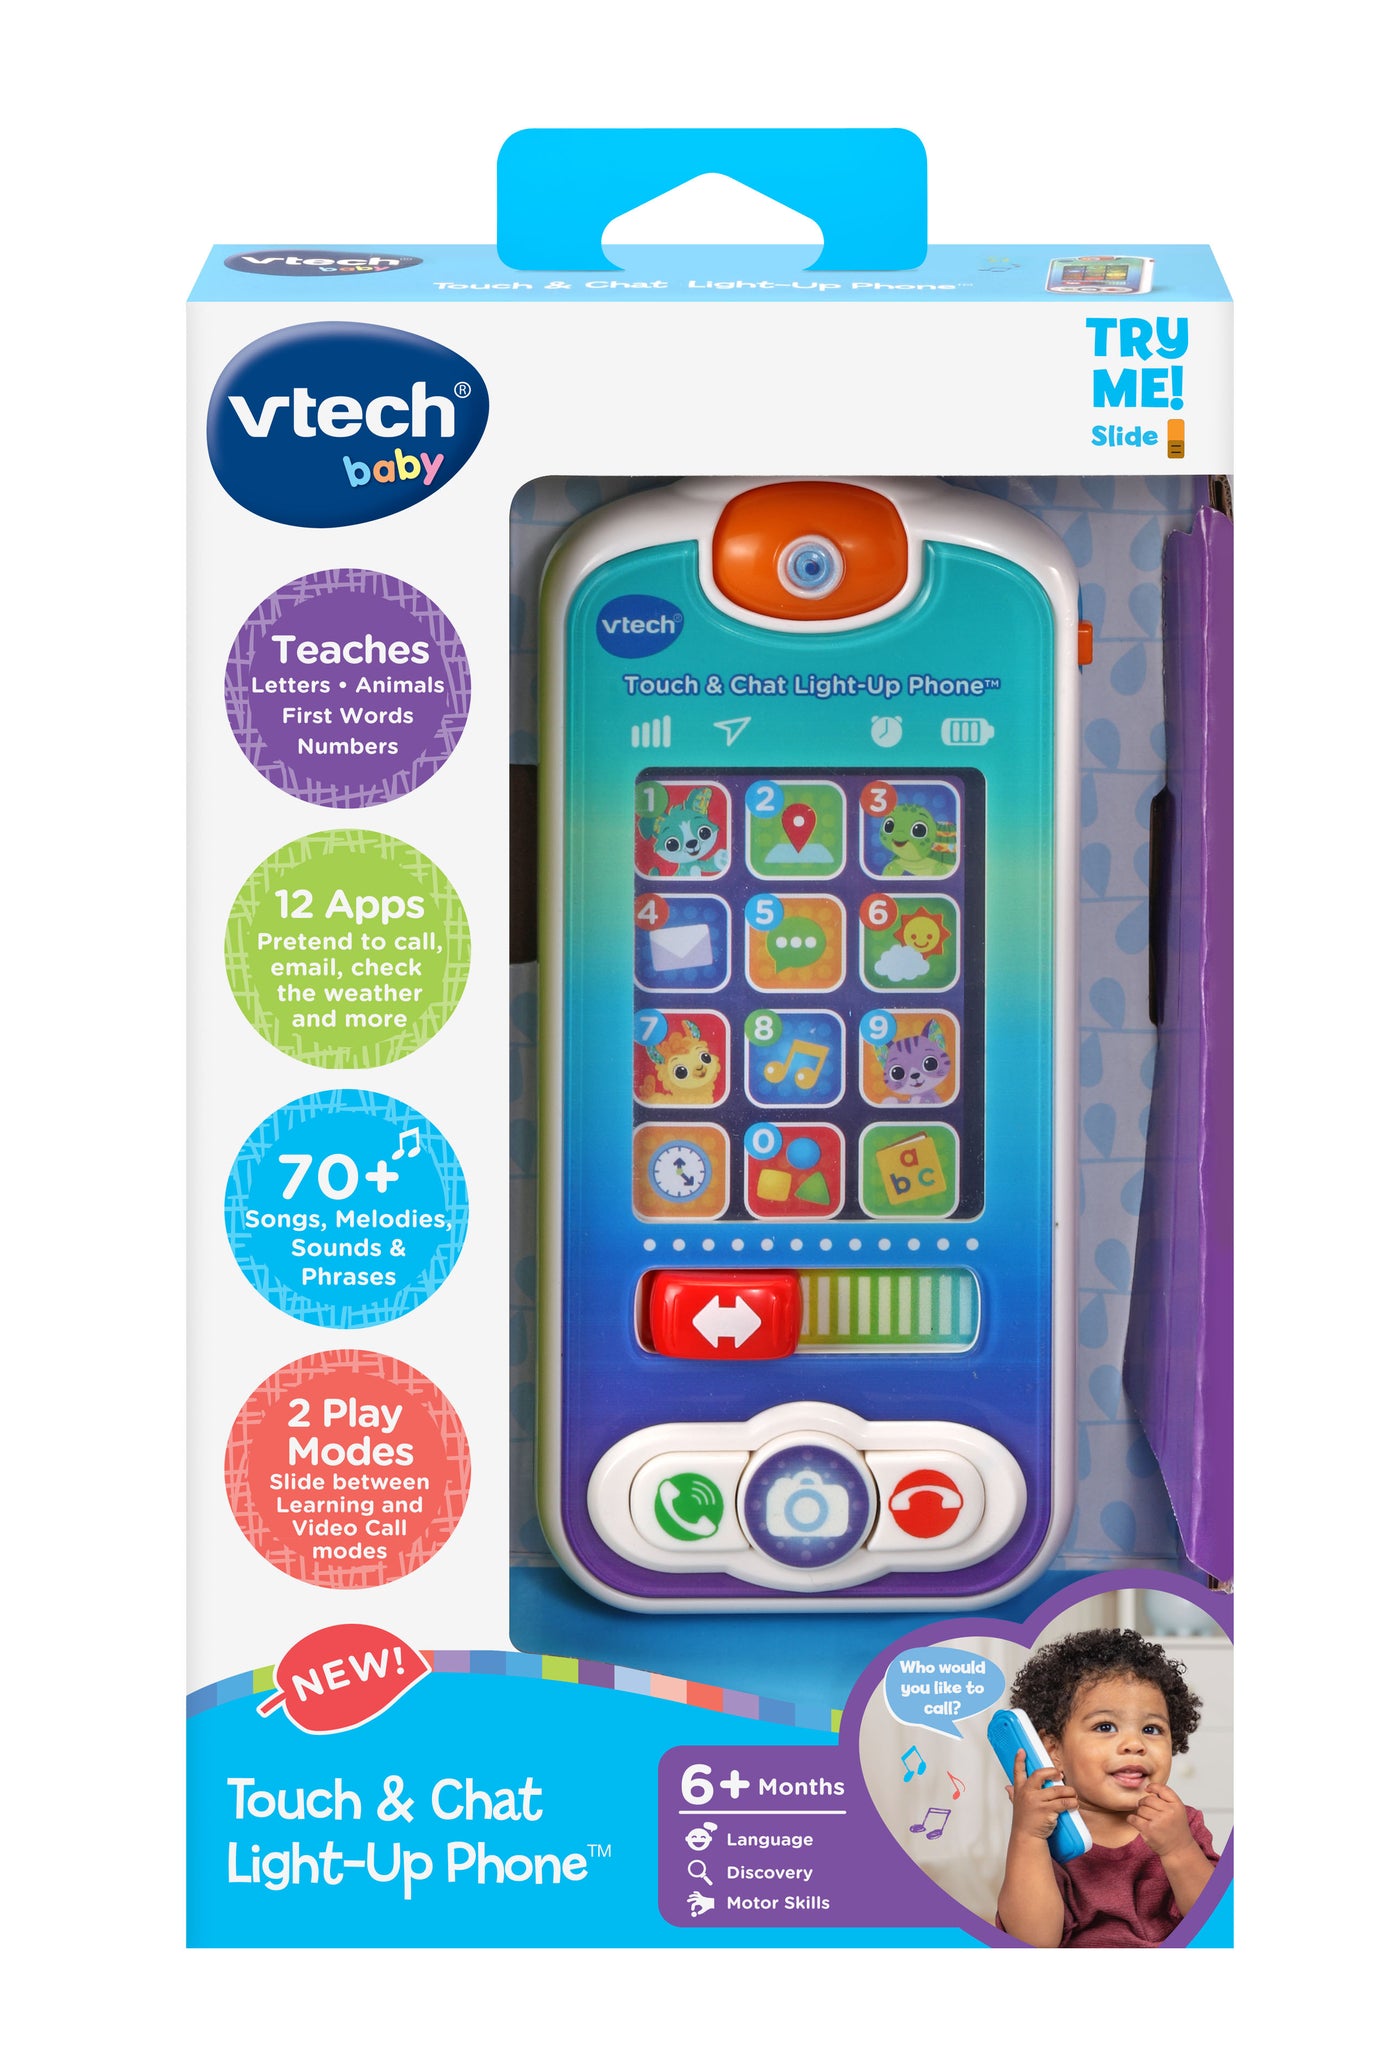 Vtech VTech Baby® Touch & Chat Light-Up Phone™